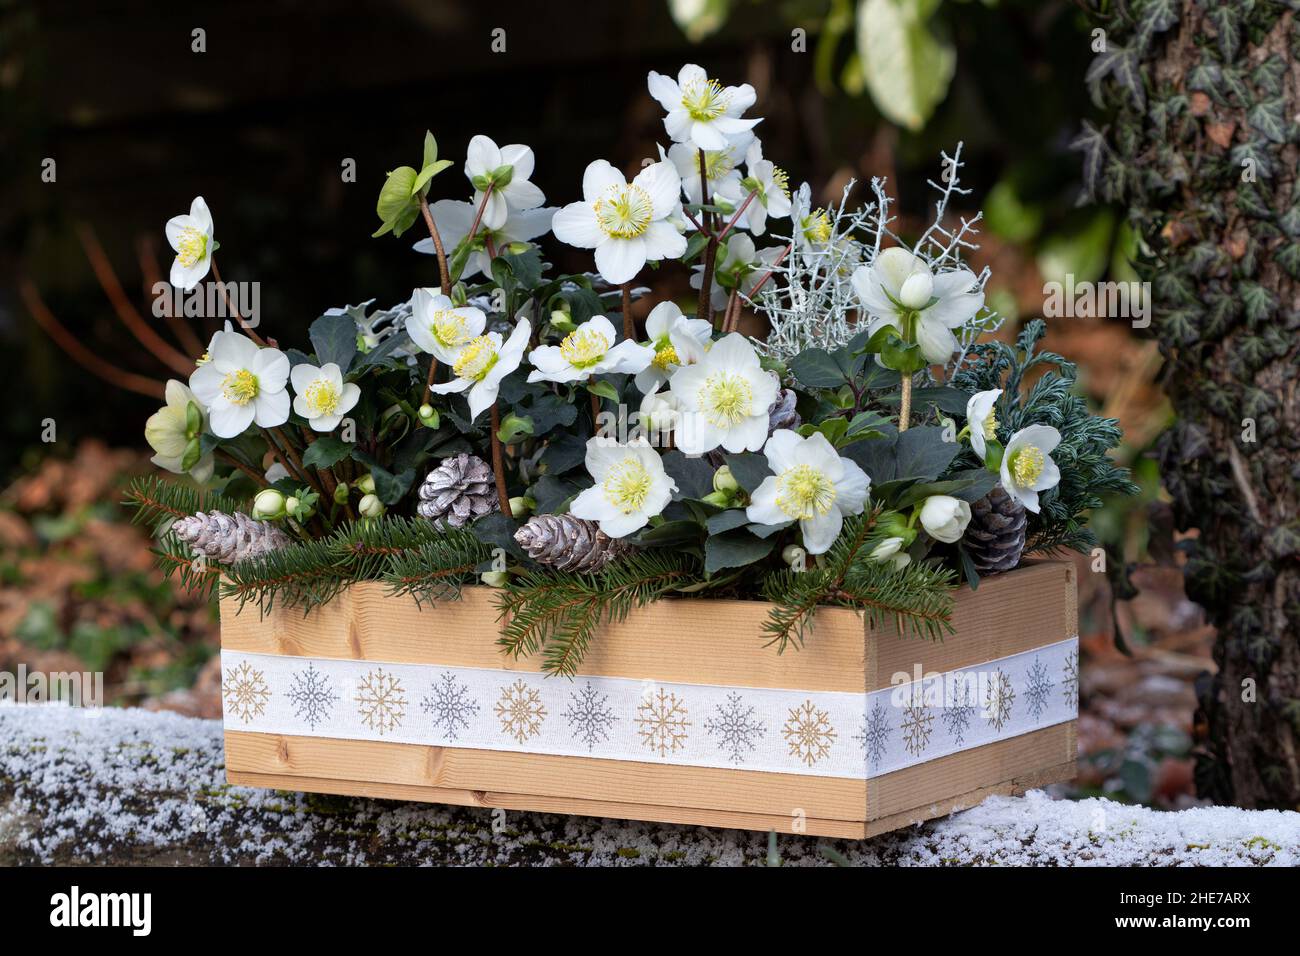 helleborus niger in wooden box in winter garden Stock Photo